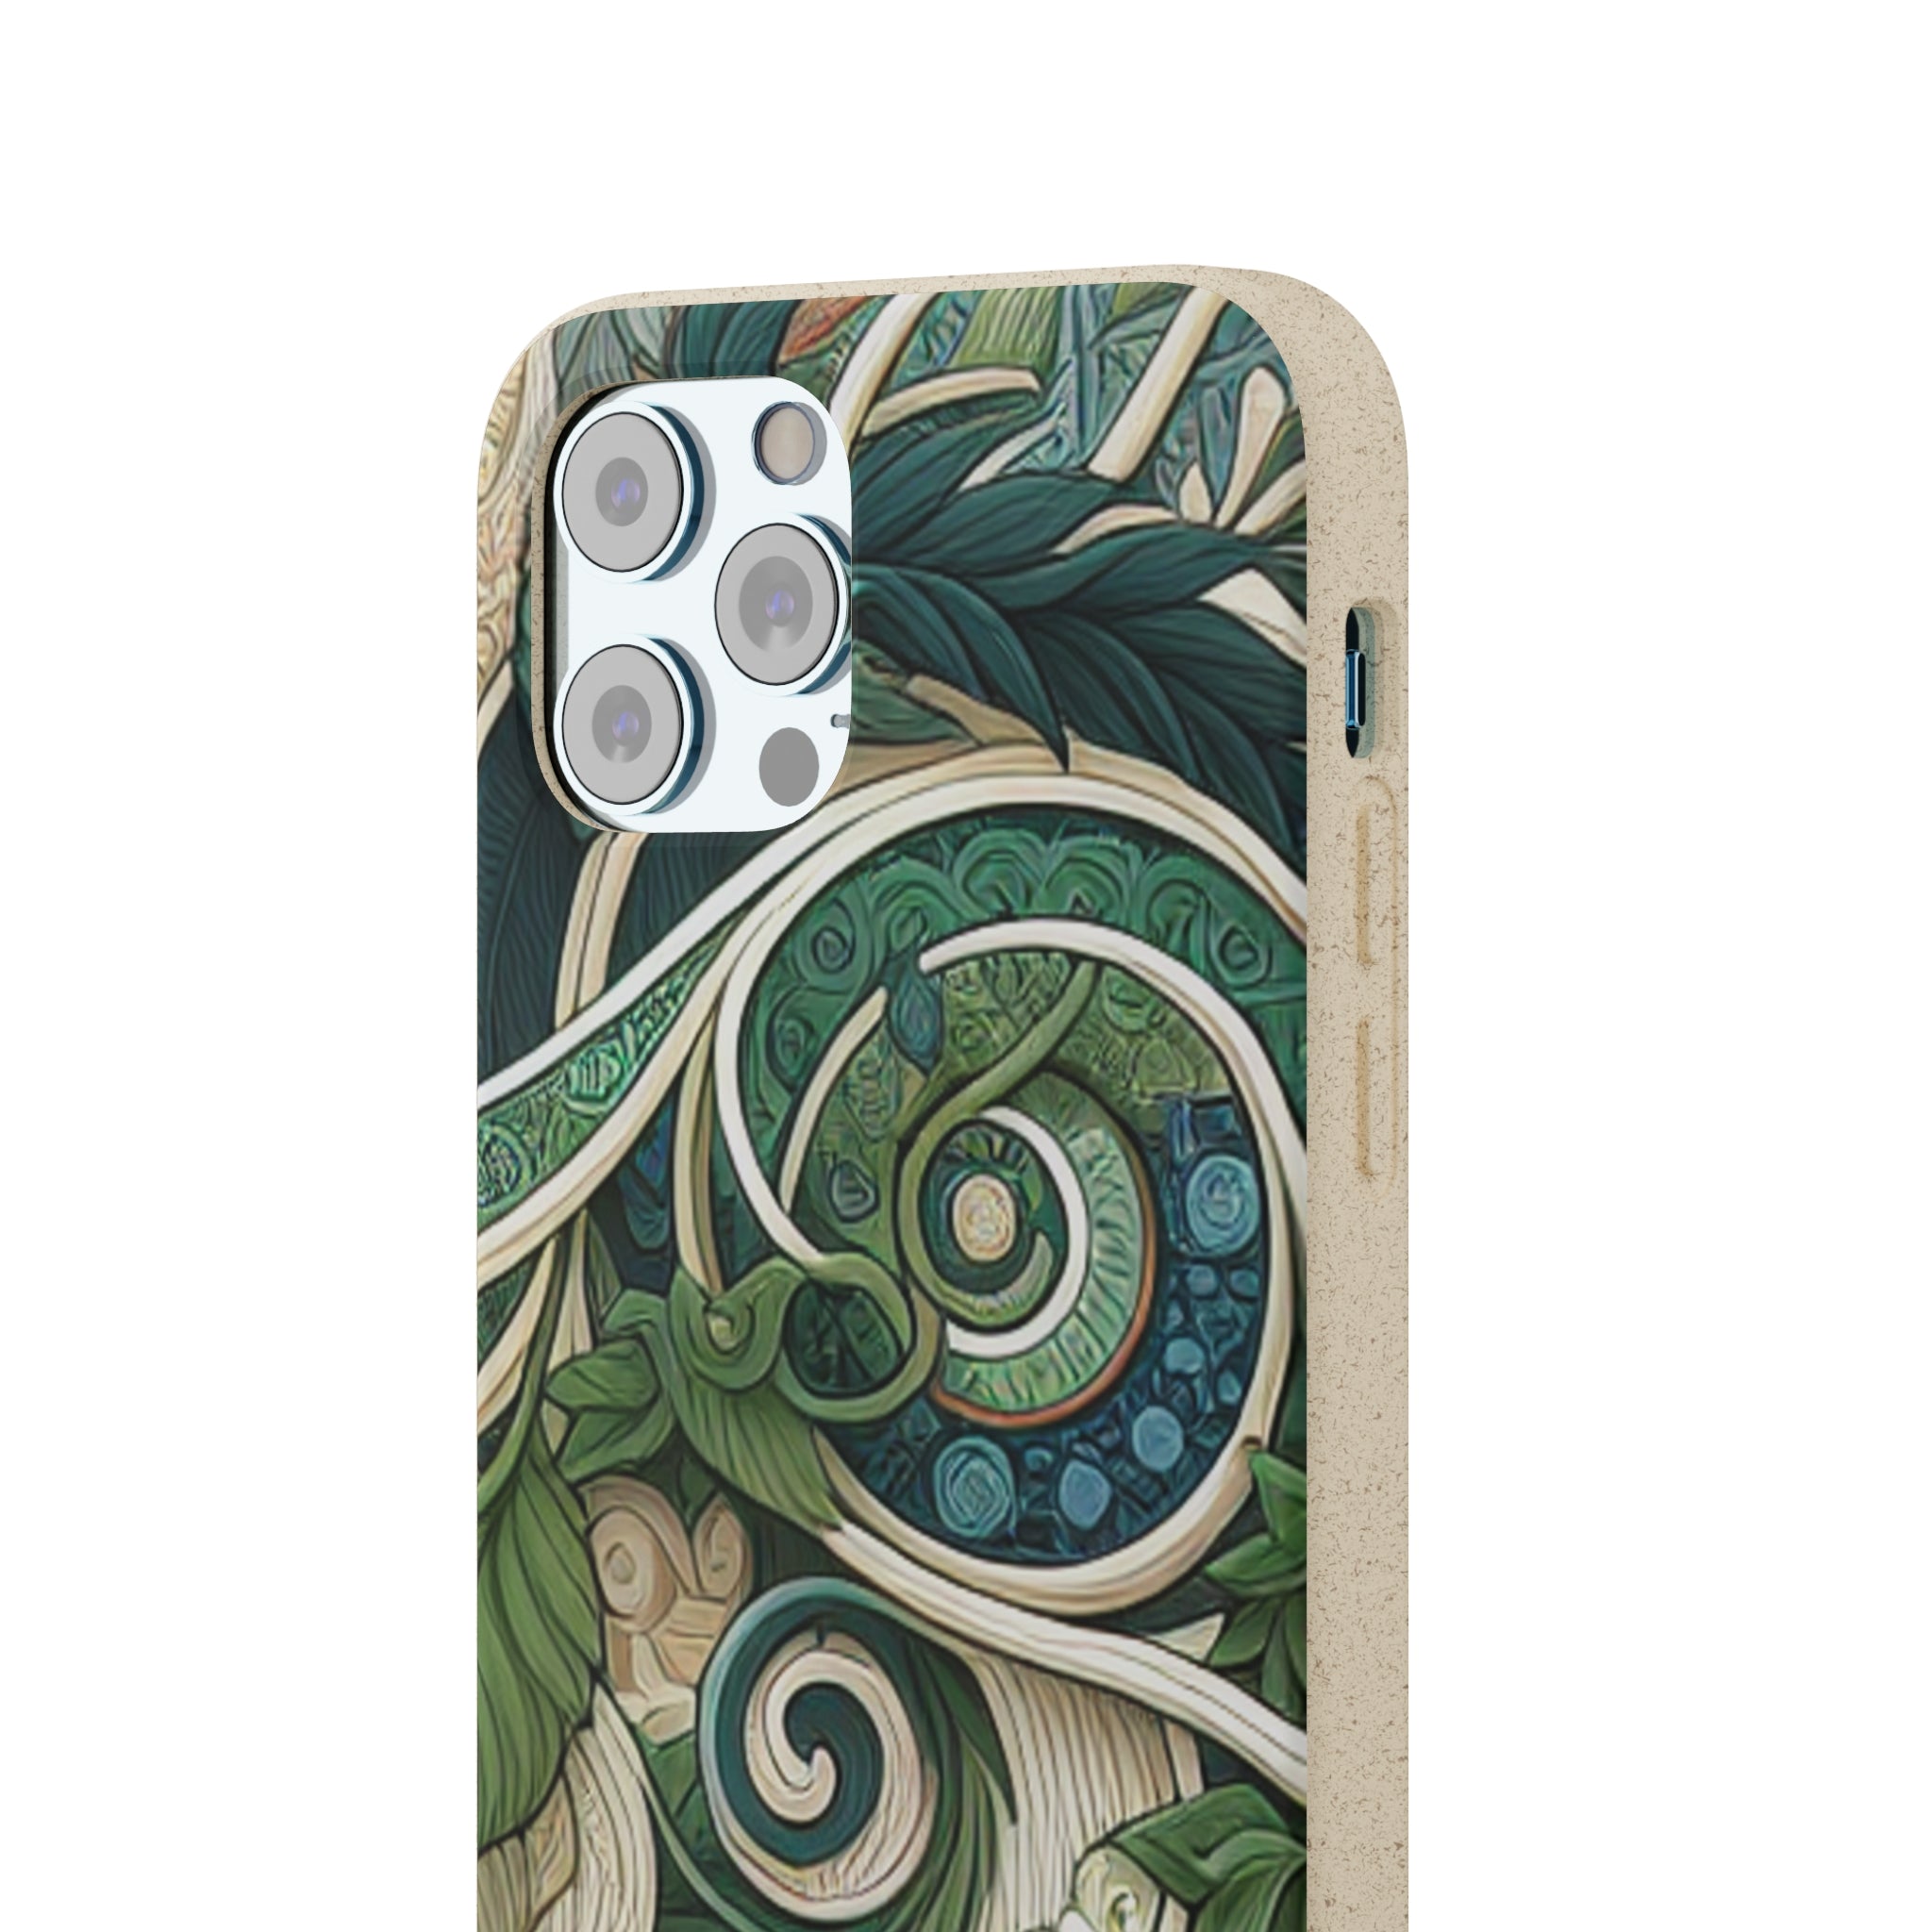 Irene Stone - Biodegradable iPhone Cases